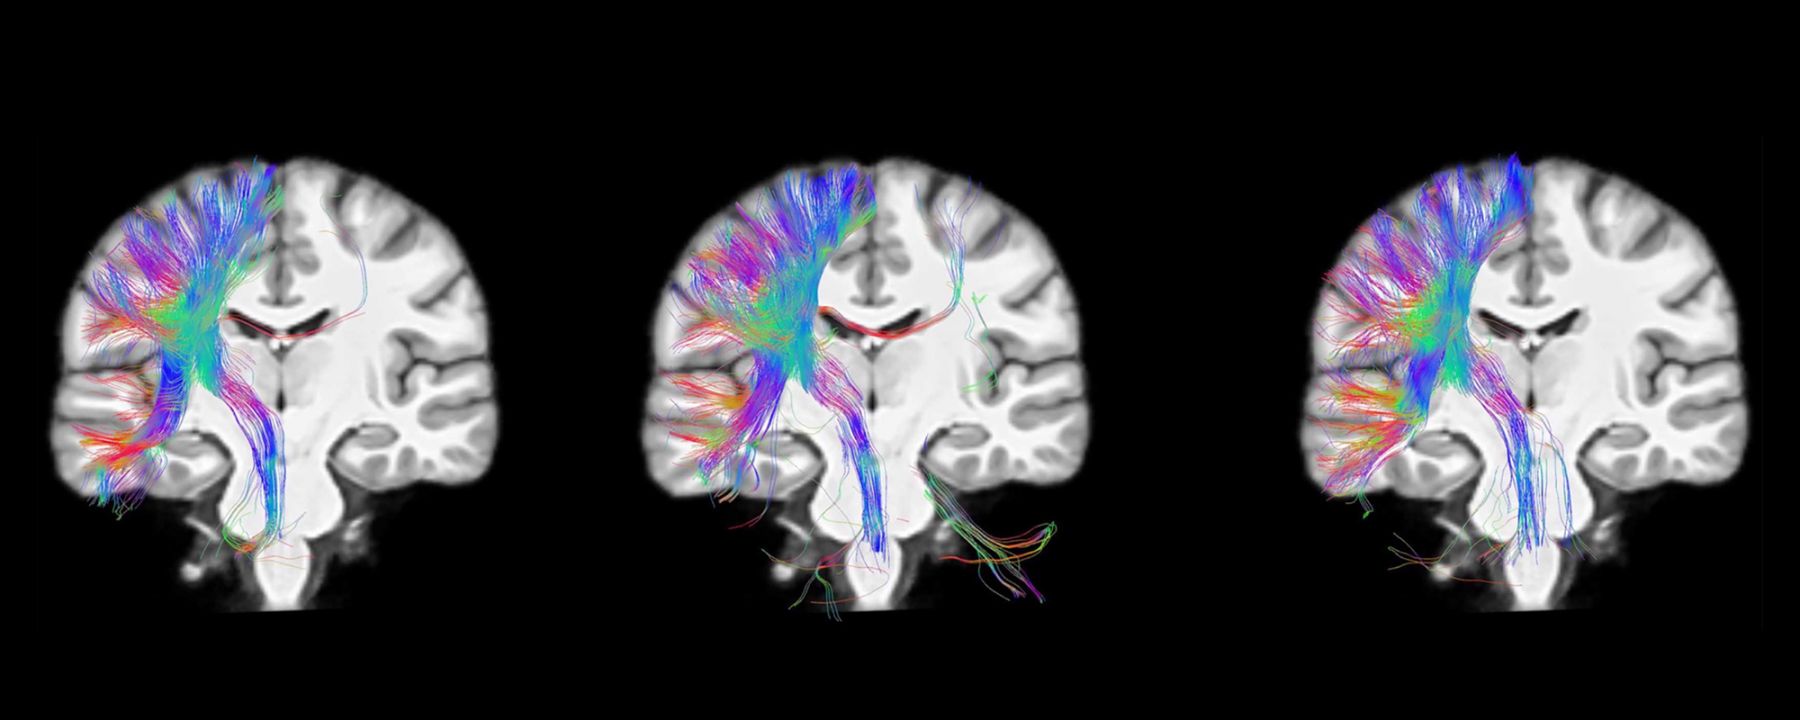 MRI diffusion imaging demonstrating individual variation of primary motor cortex connectivity.